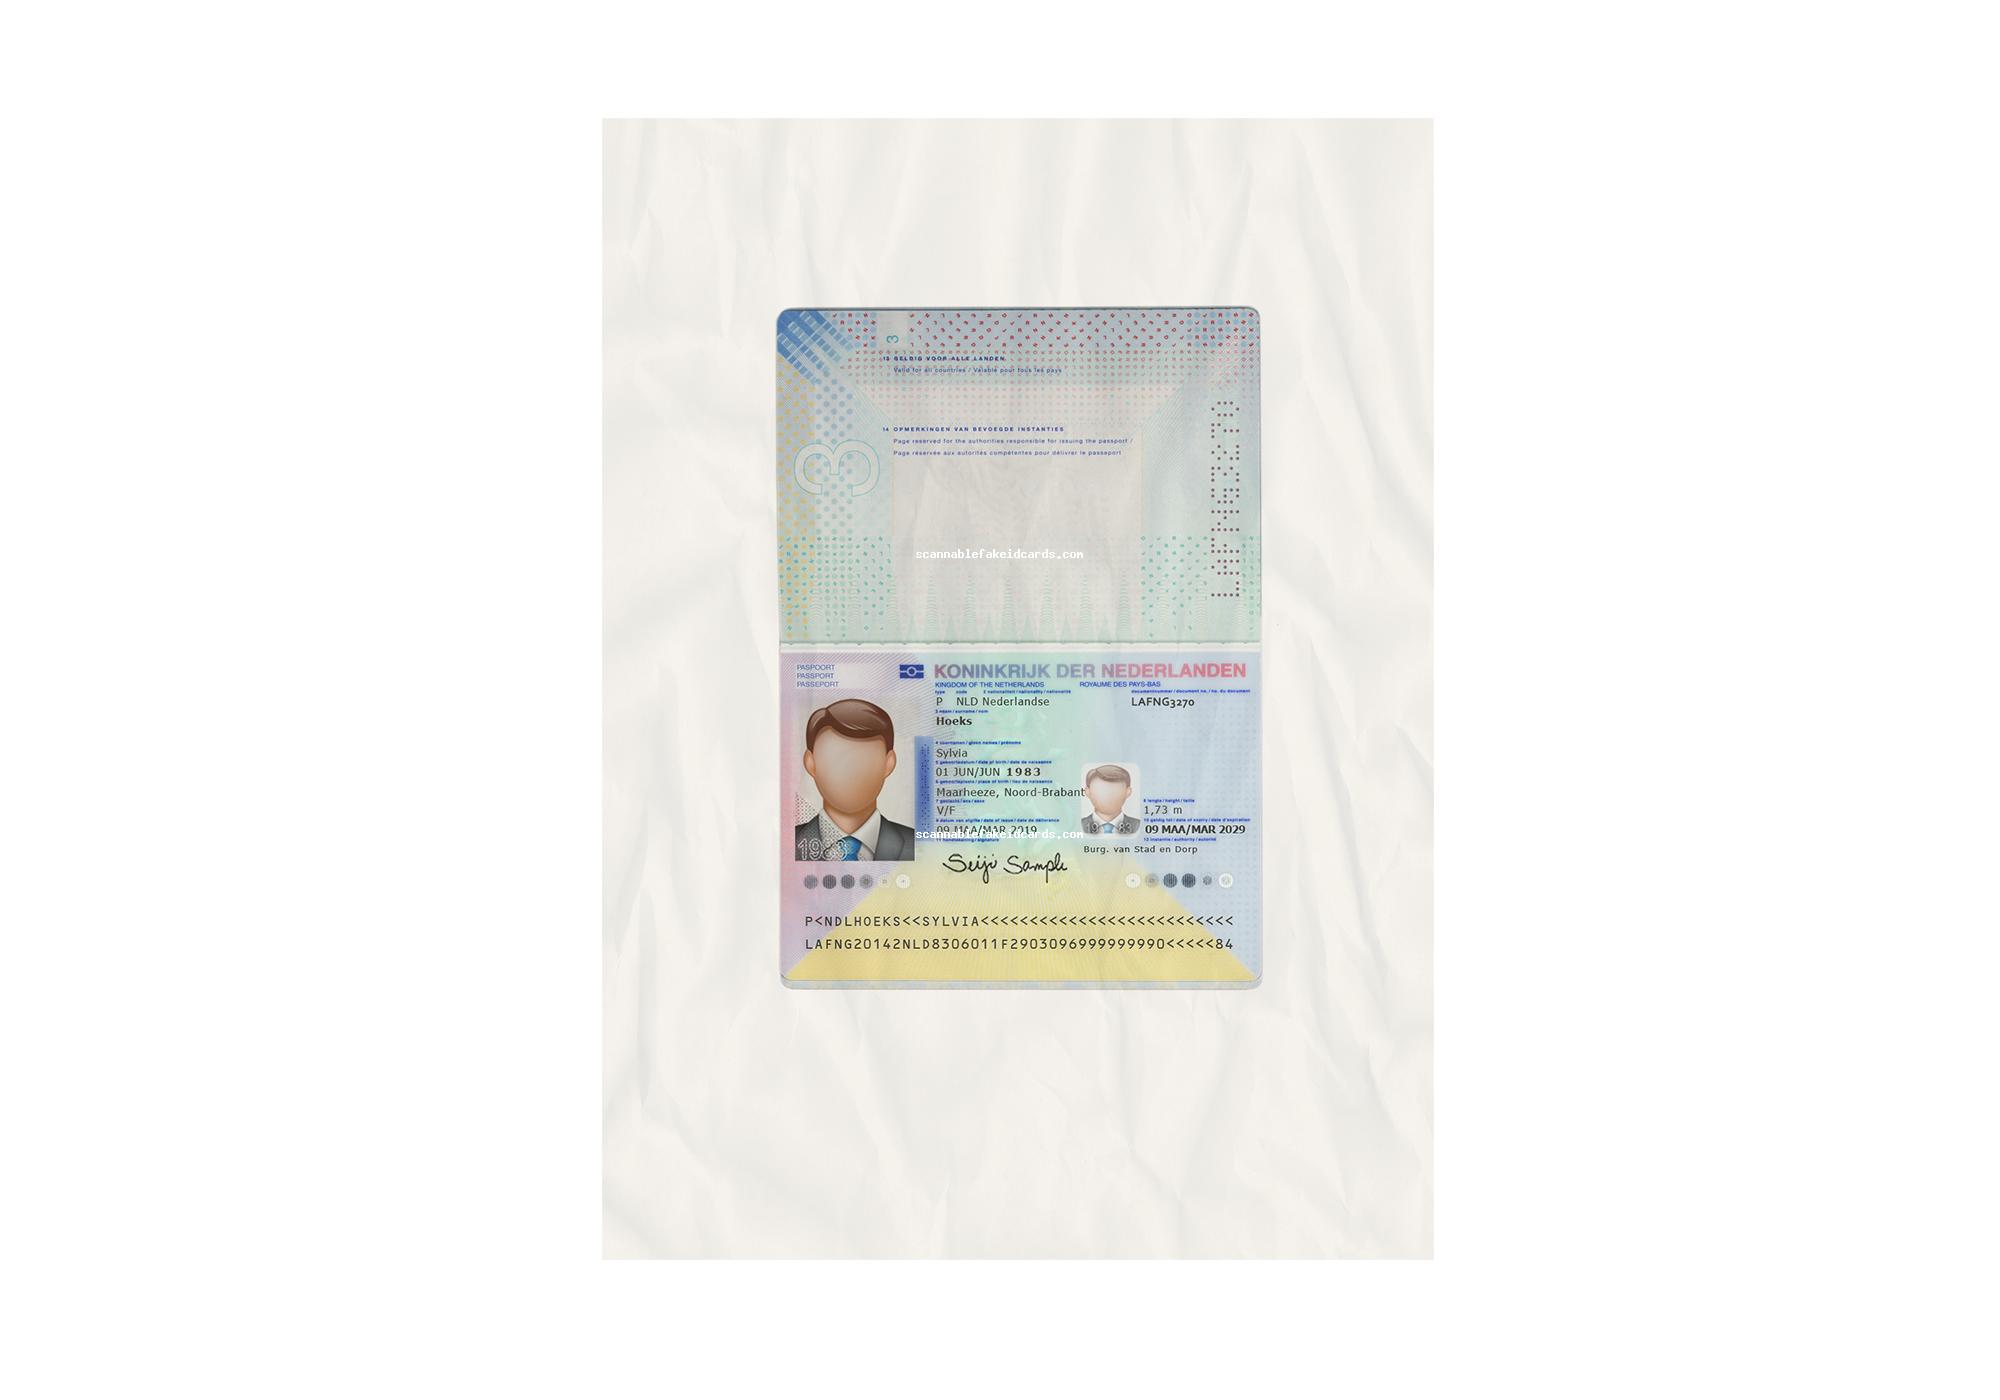 El Salvador Passport - Buy Scannable Fake Id - Fake ID Online